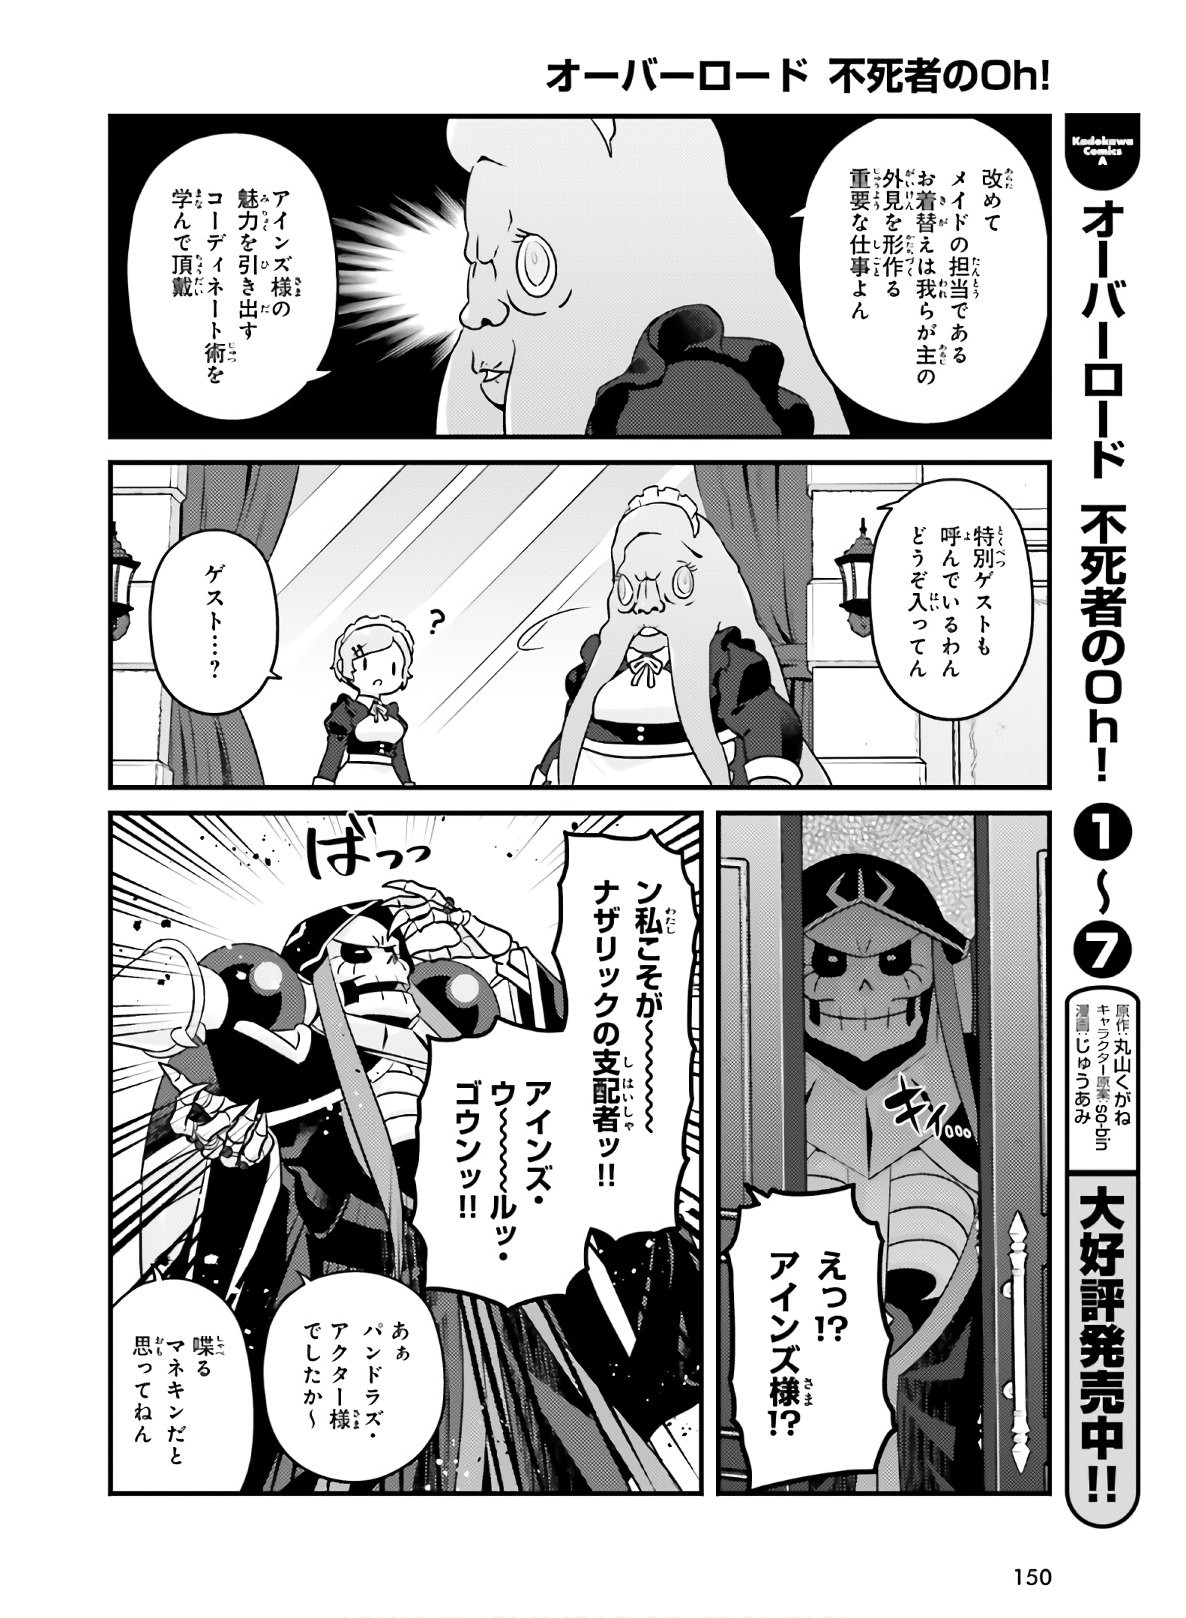 Overlord-Fushisha-no-Oh - Chapter 49 - Page 4